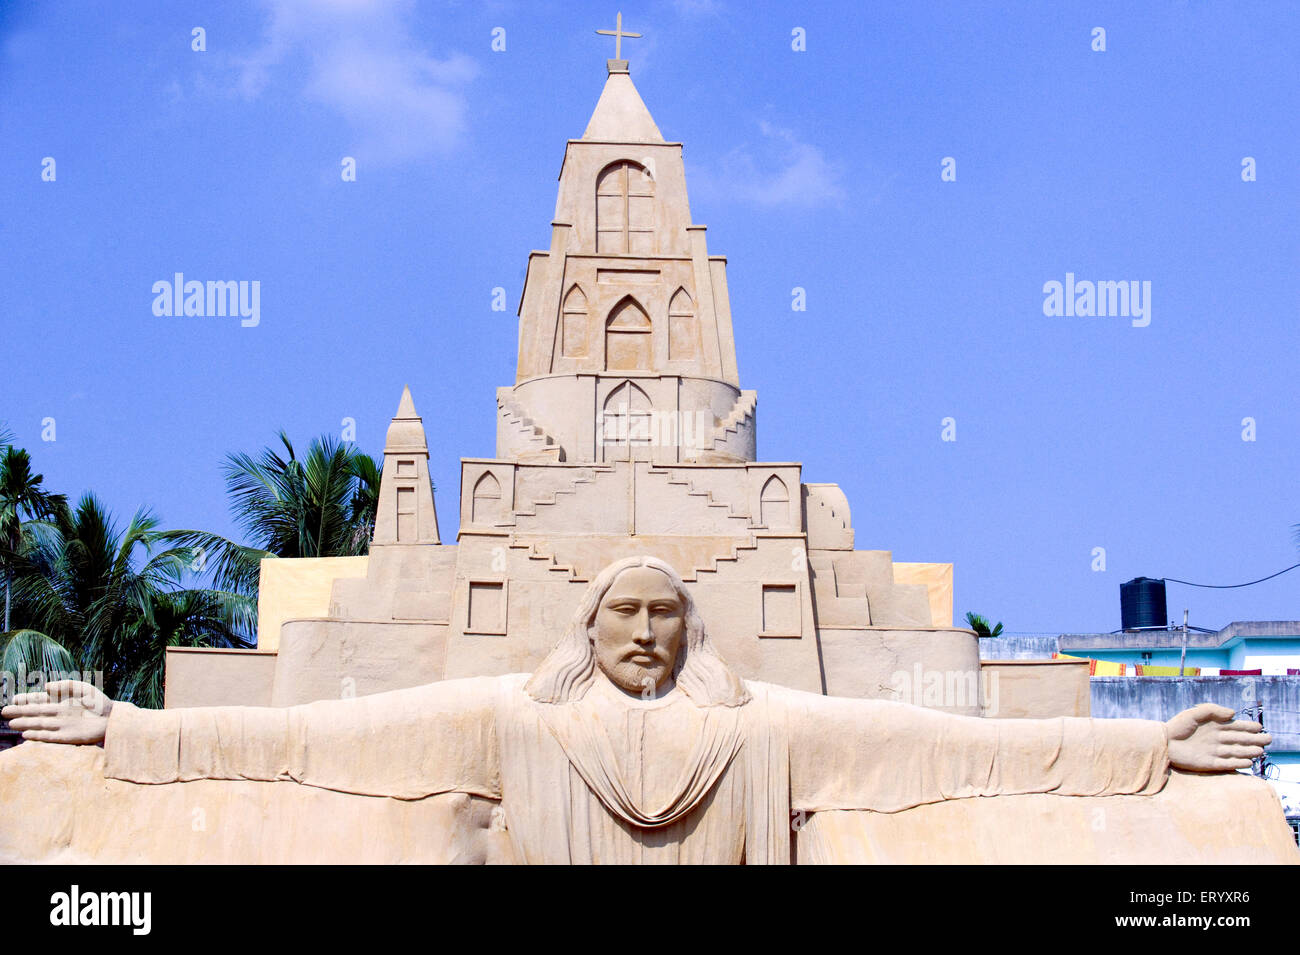 Herr Jesus Christus, Sandskulptur, Dekoration des Durga Puja Pavillons, Durga Puja Festival, Kalkutta, kolkata, Westbengalen; Indien, asien Stockfoto